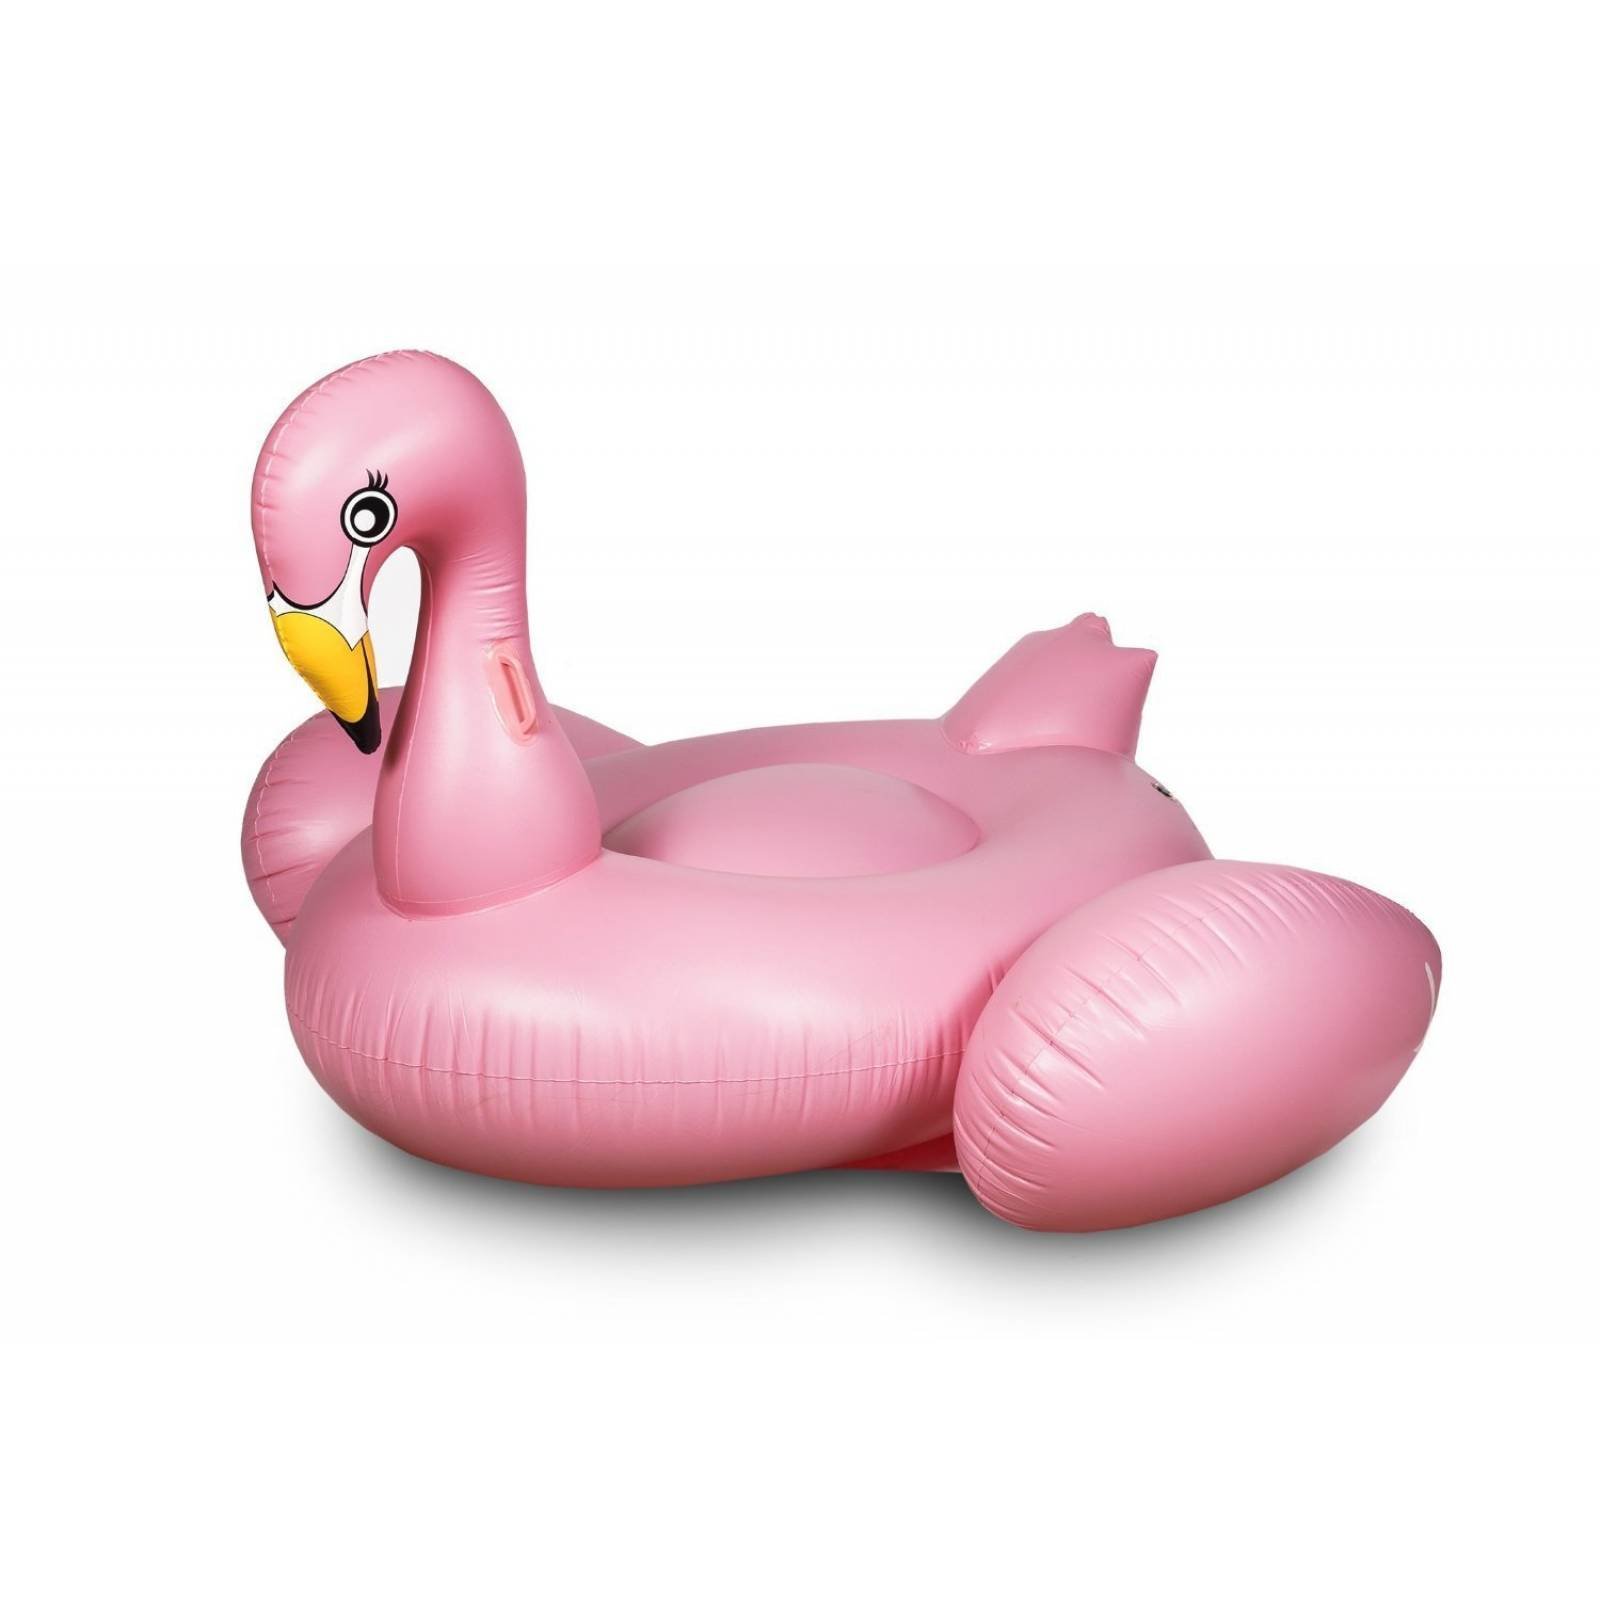 Flotador Giant Bean Bag Chairs Flamingo Gigante -rosa